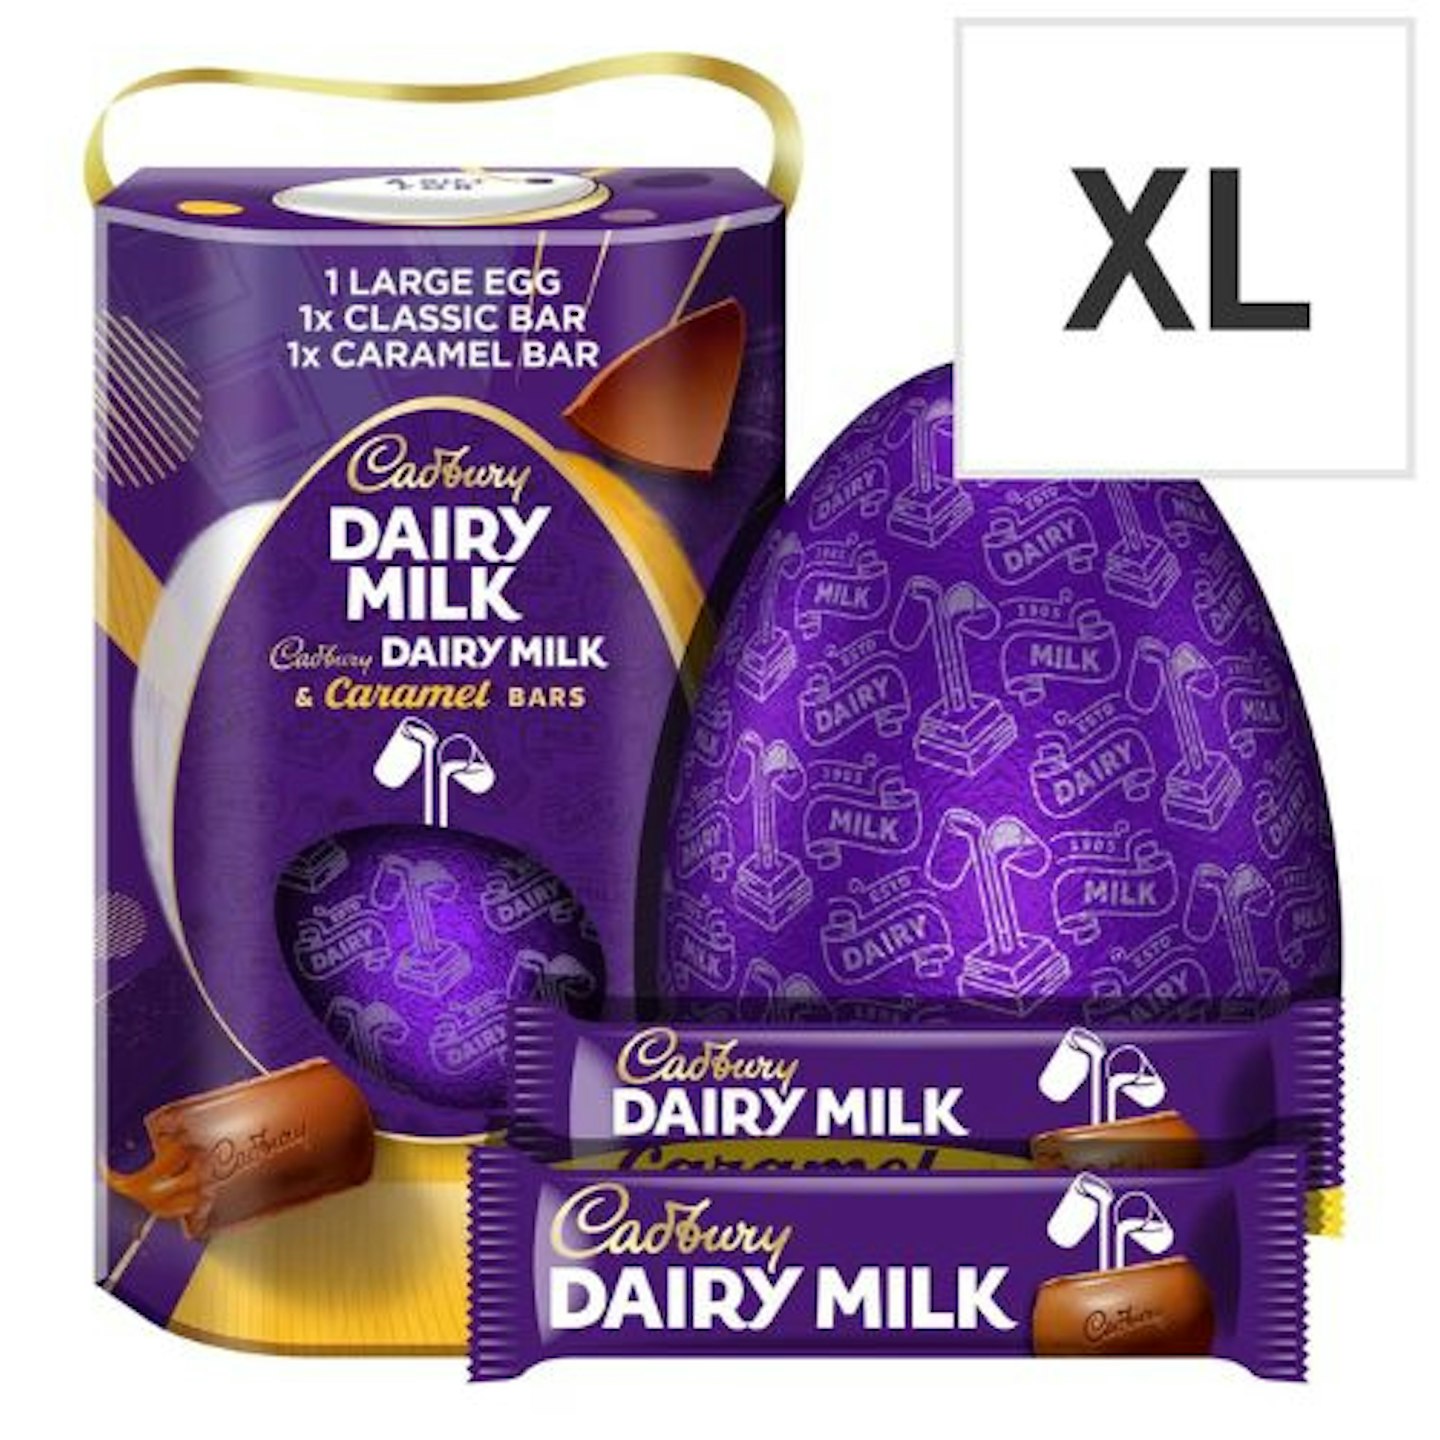 Cadbury Dairy Milk Easter Egg